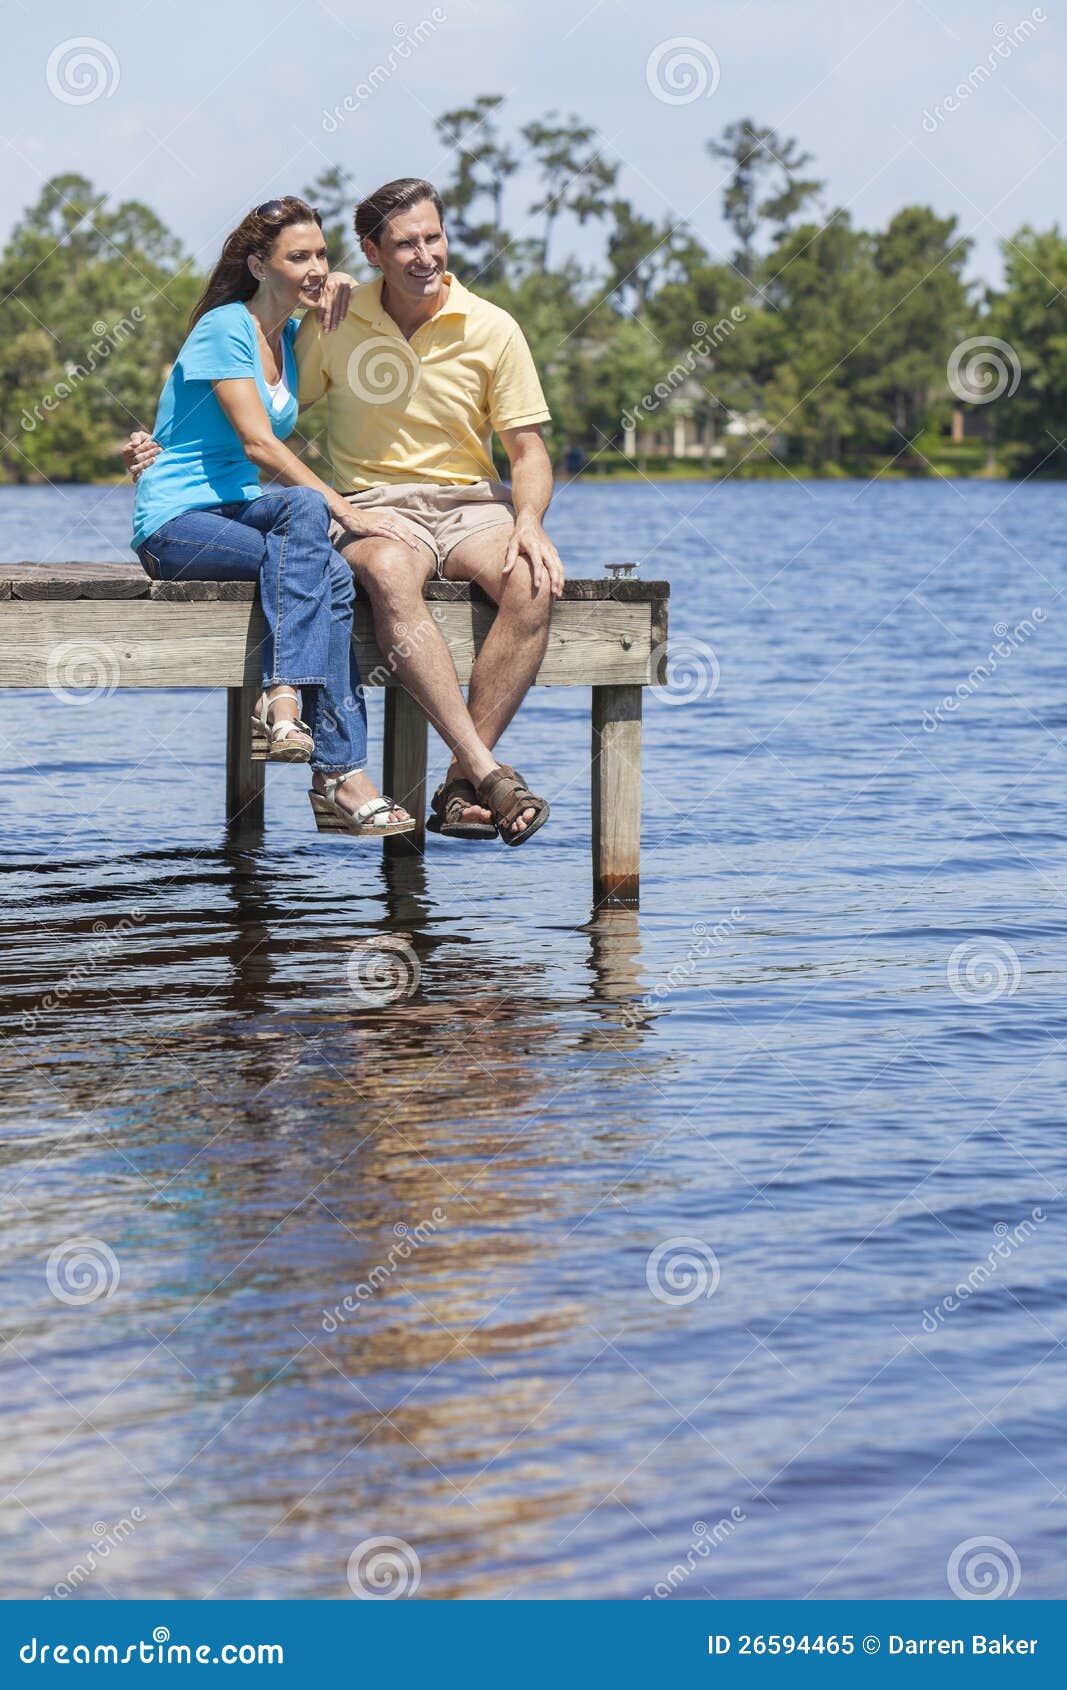 https://thumbs.dreamstime.com/z/romantic-man-woman-couple-sitting-lake-26594465.jpg